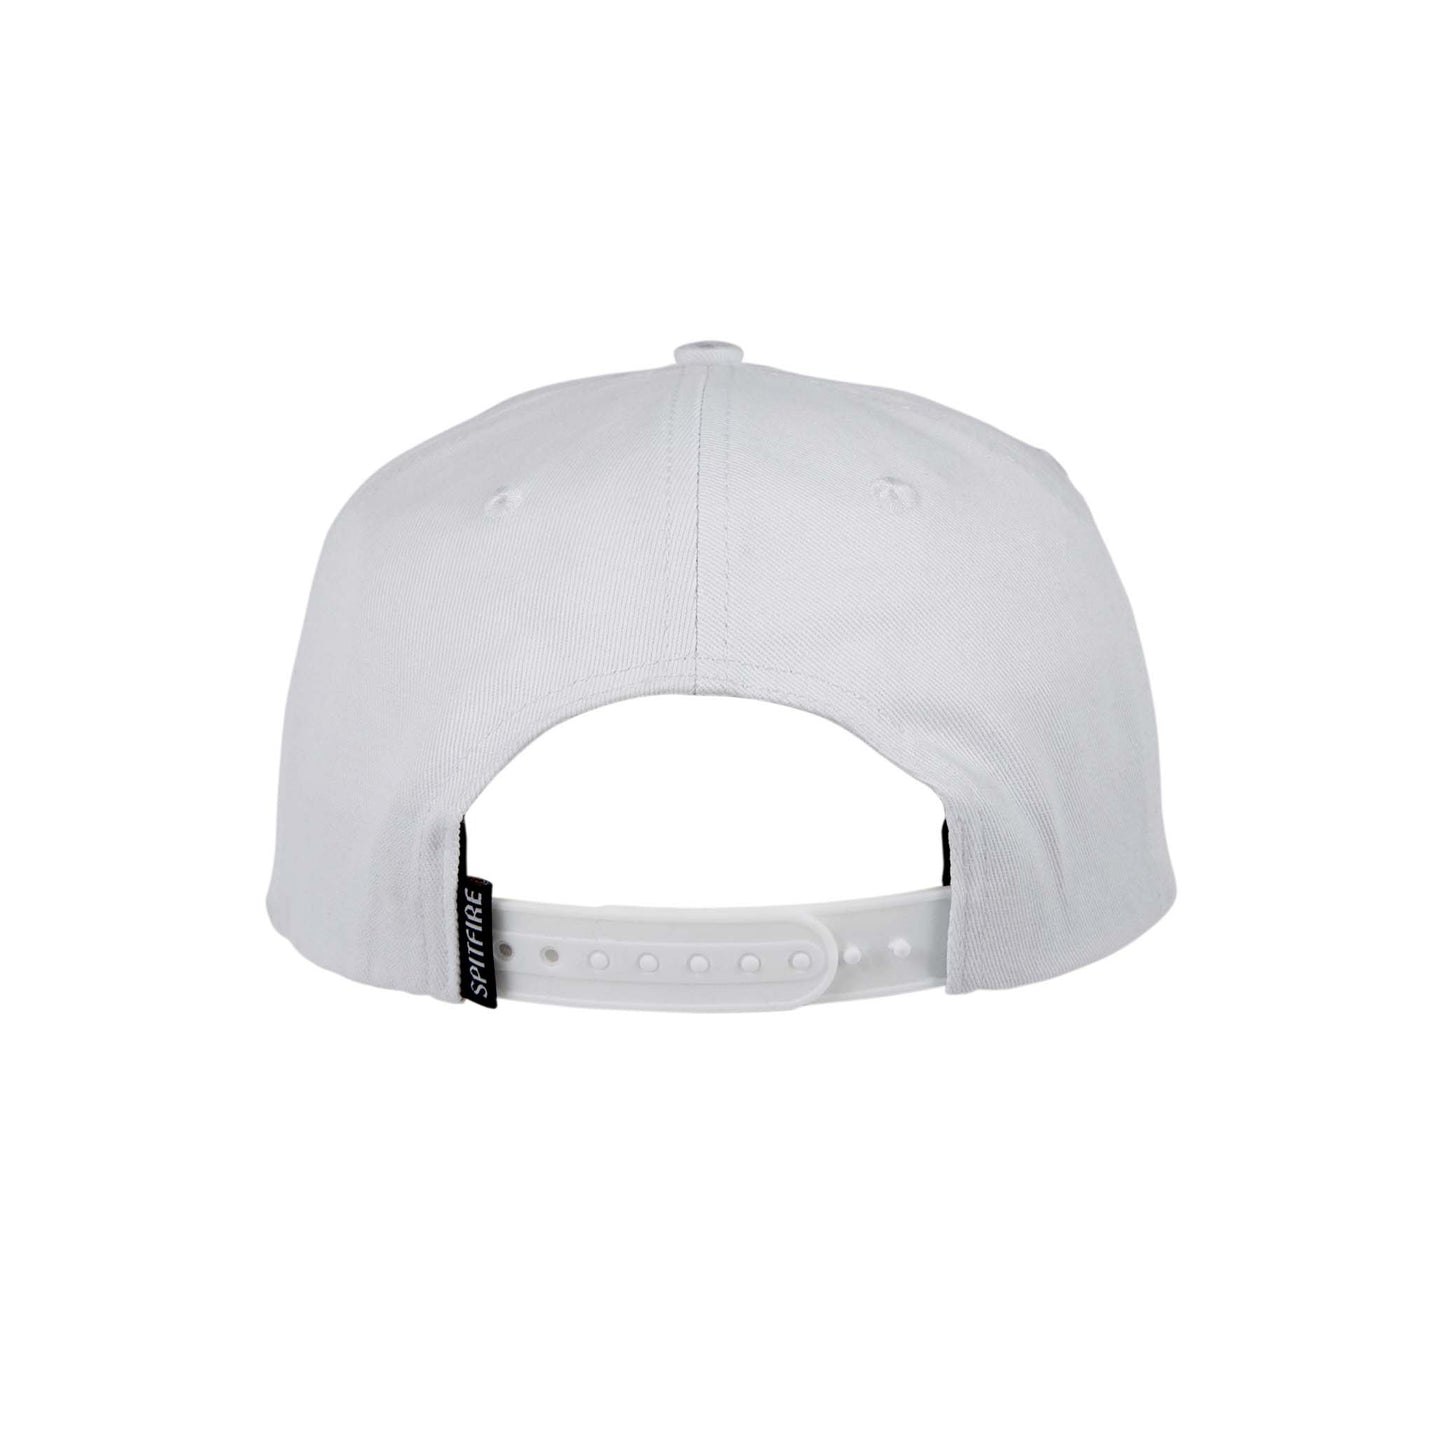 SPITFIRE - BIGHEAD ADJUSTABLE CAP - WHITE/RED